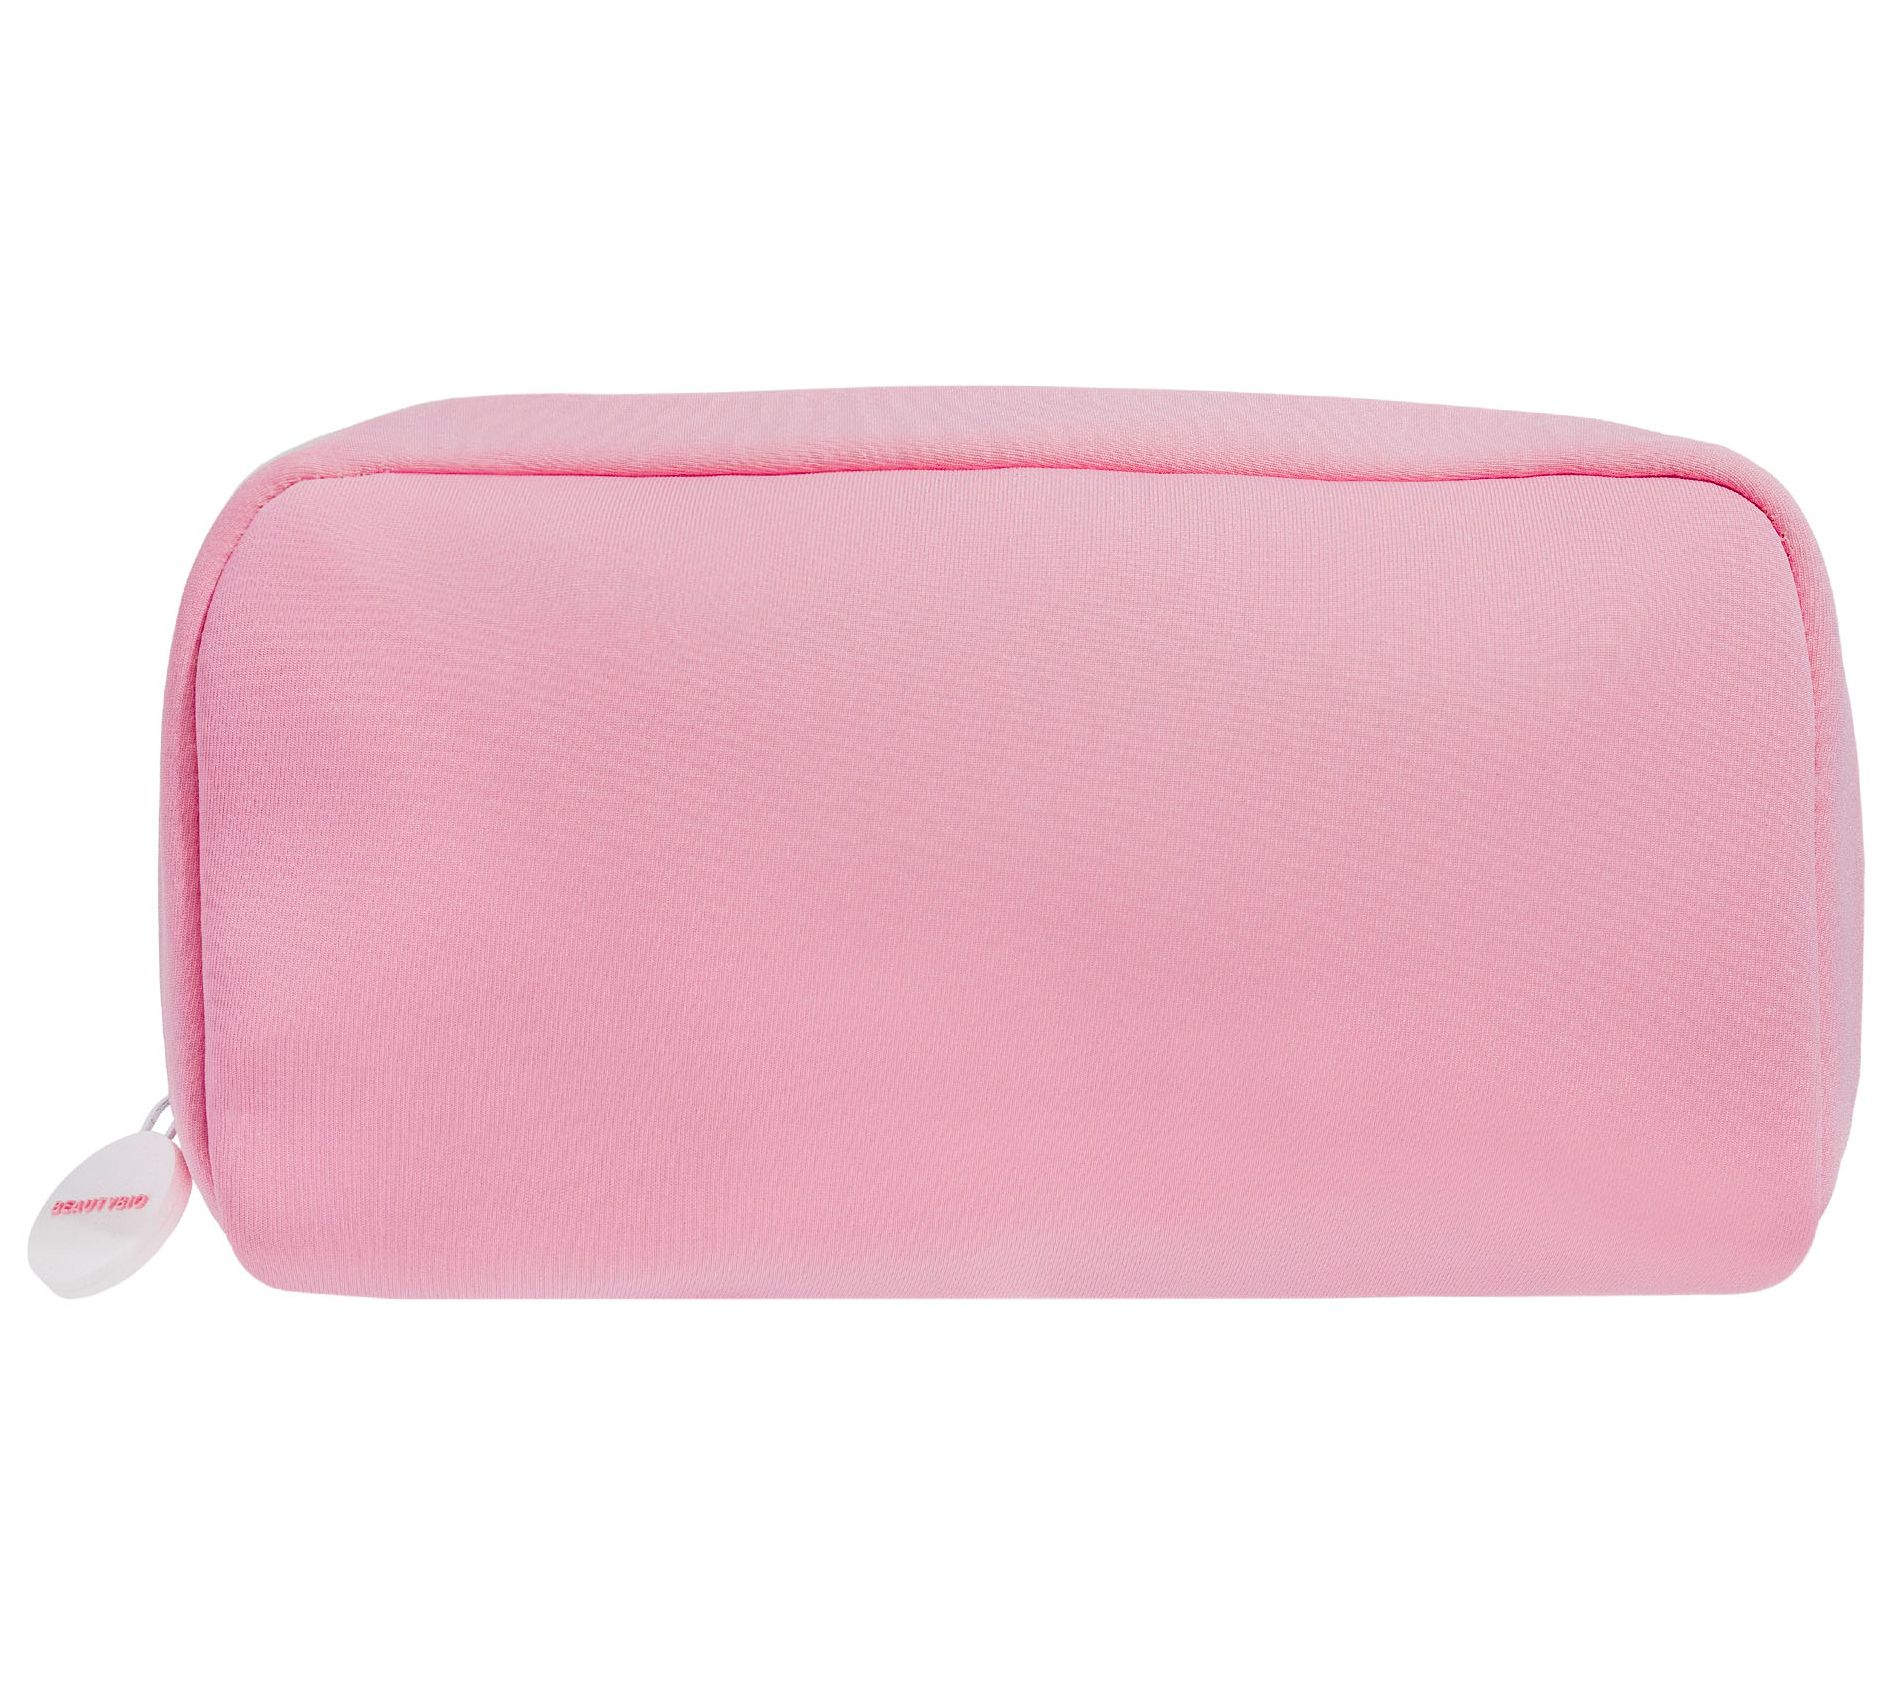 BeautyBio Pink Cosmetic Bag - QVC.com